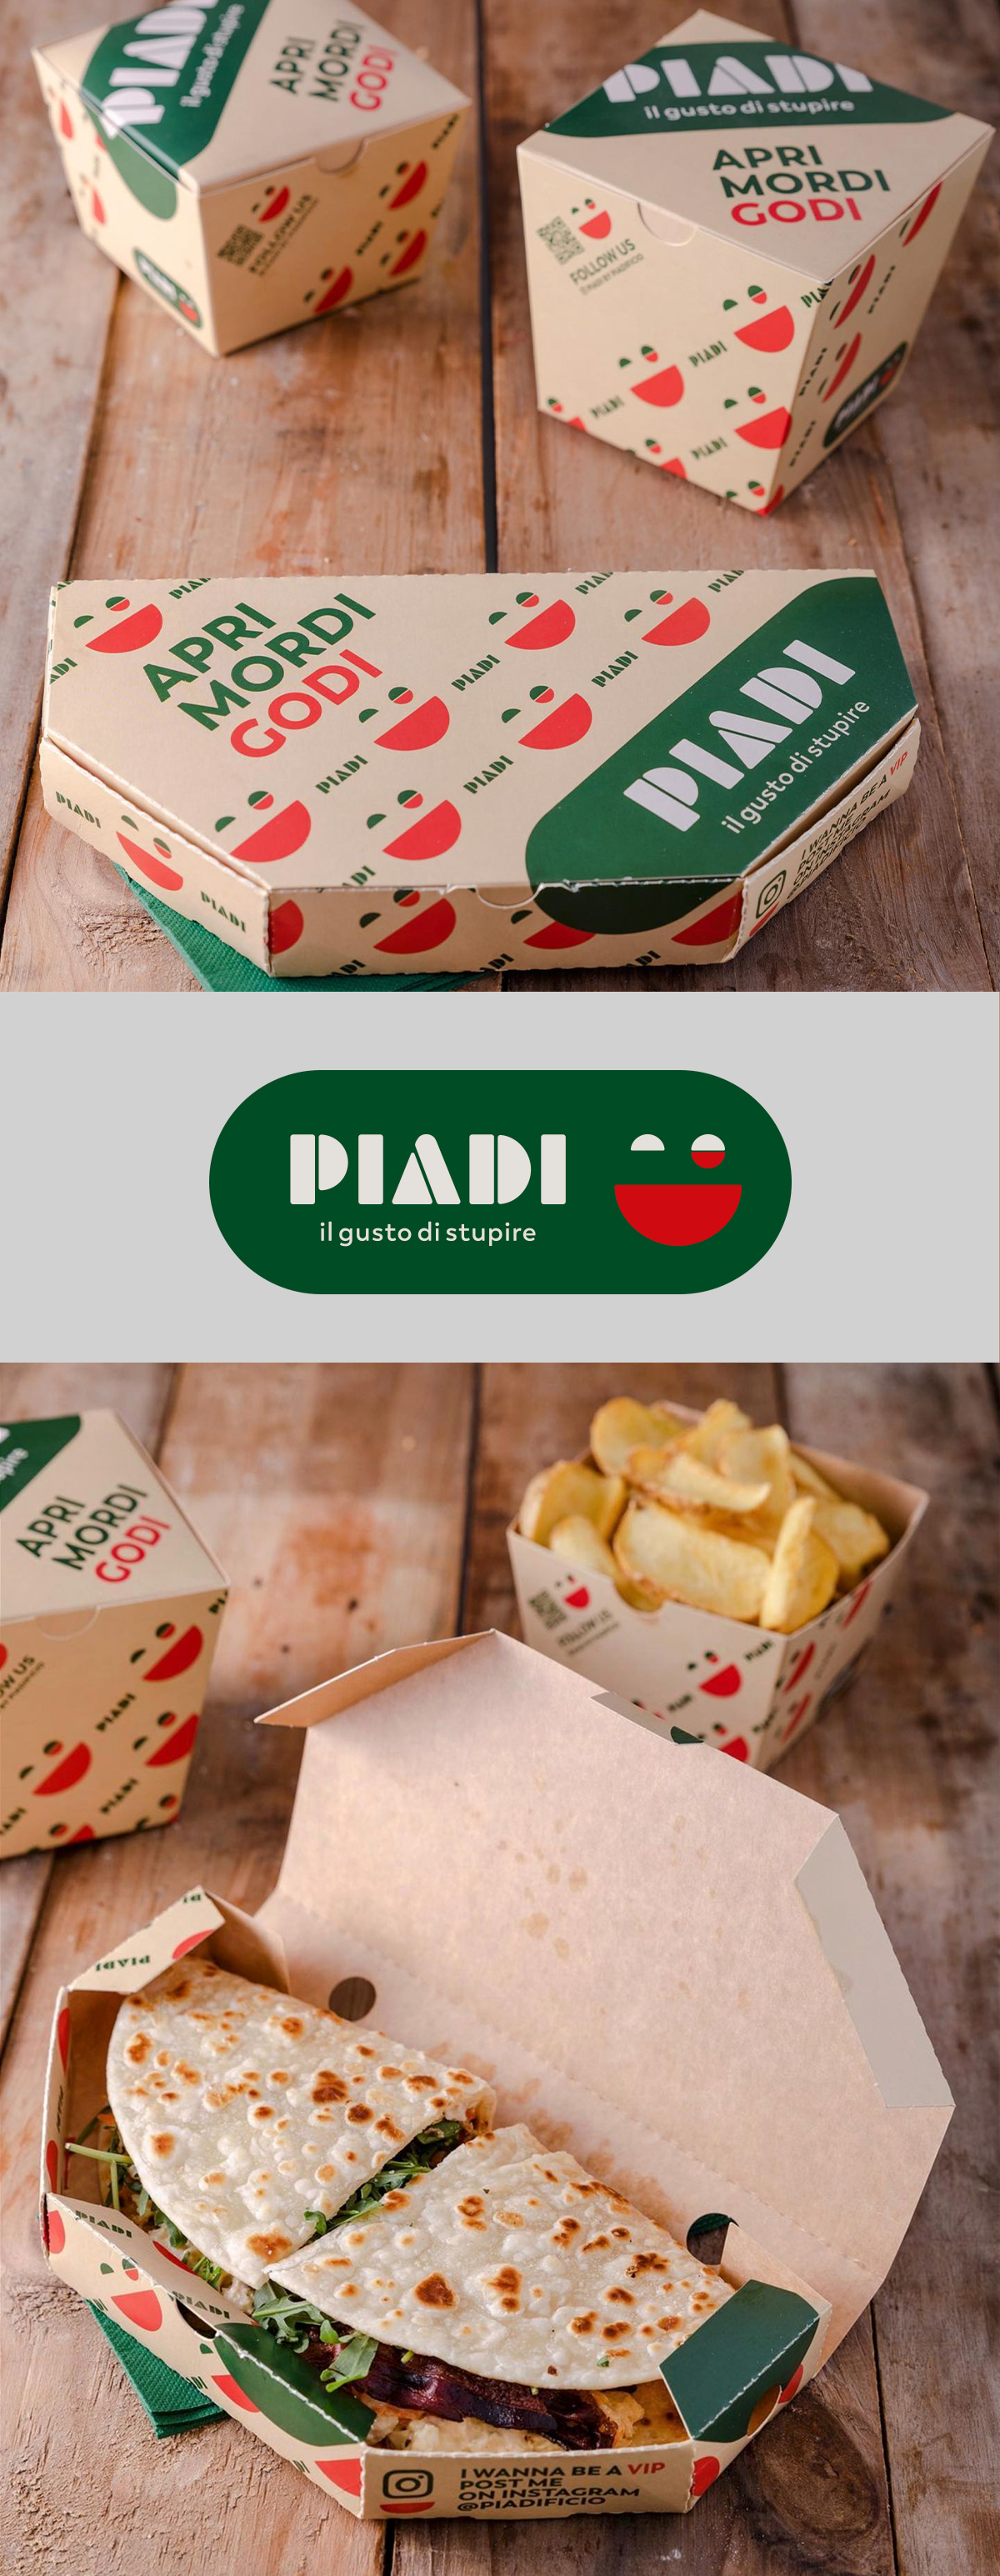 Piadi Milan - Brand Identity by Nicola Sancisi - Creative Work - $i